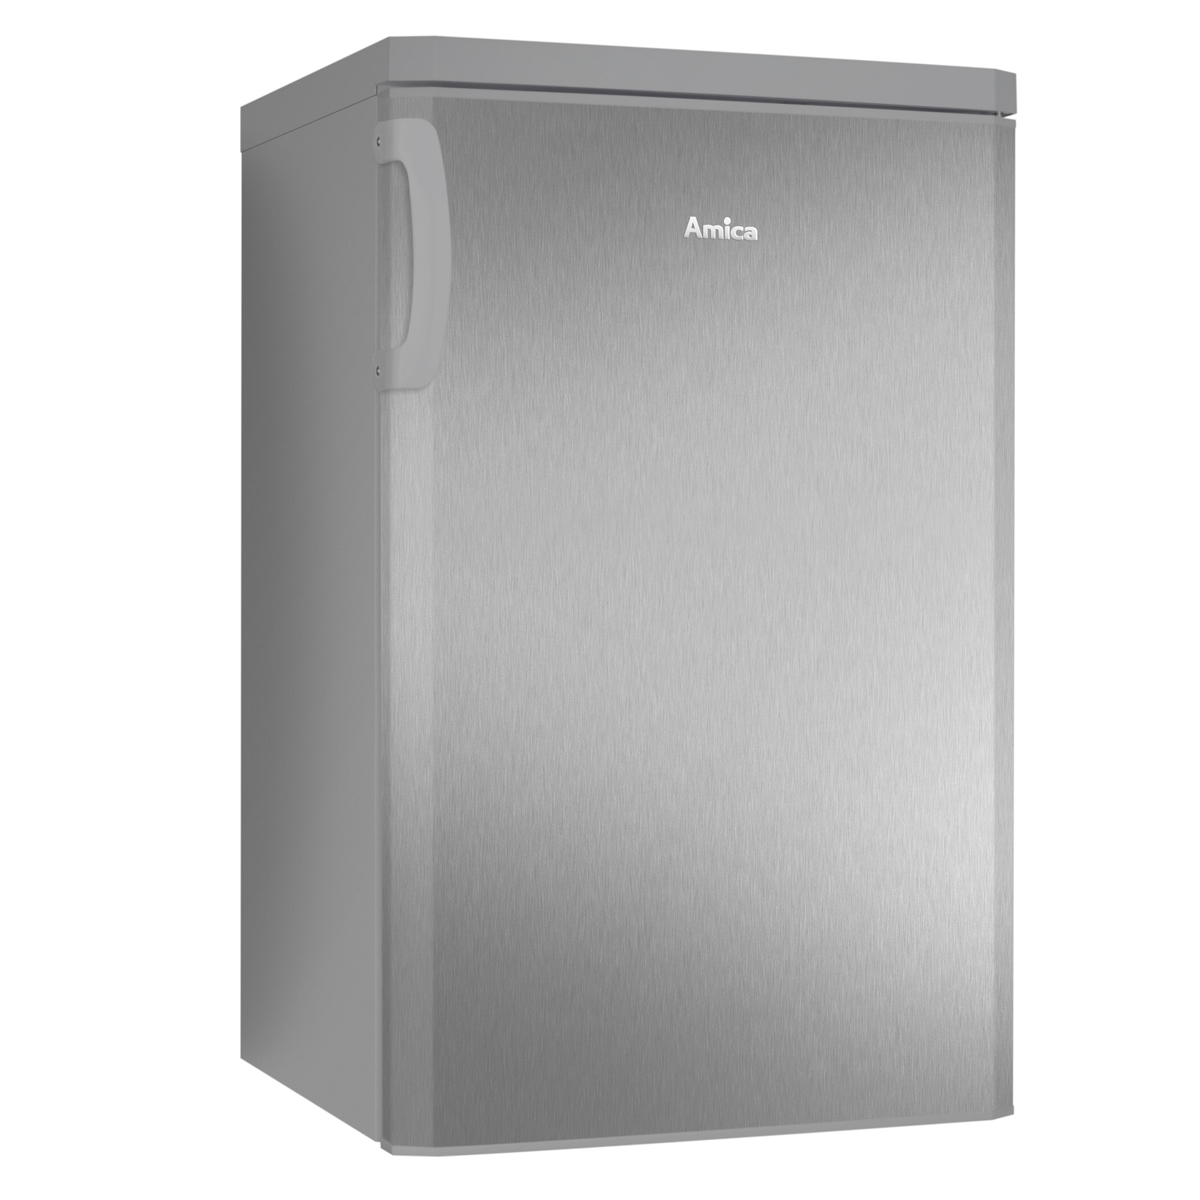 AMICA L cm hoch, Edelstahloptik Kühlschrank Silber 84,5 freistehend Vollraumkühlschrank (E, Kühlschrank Silber) 120